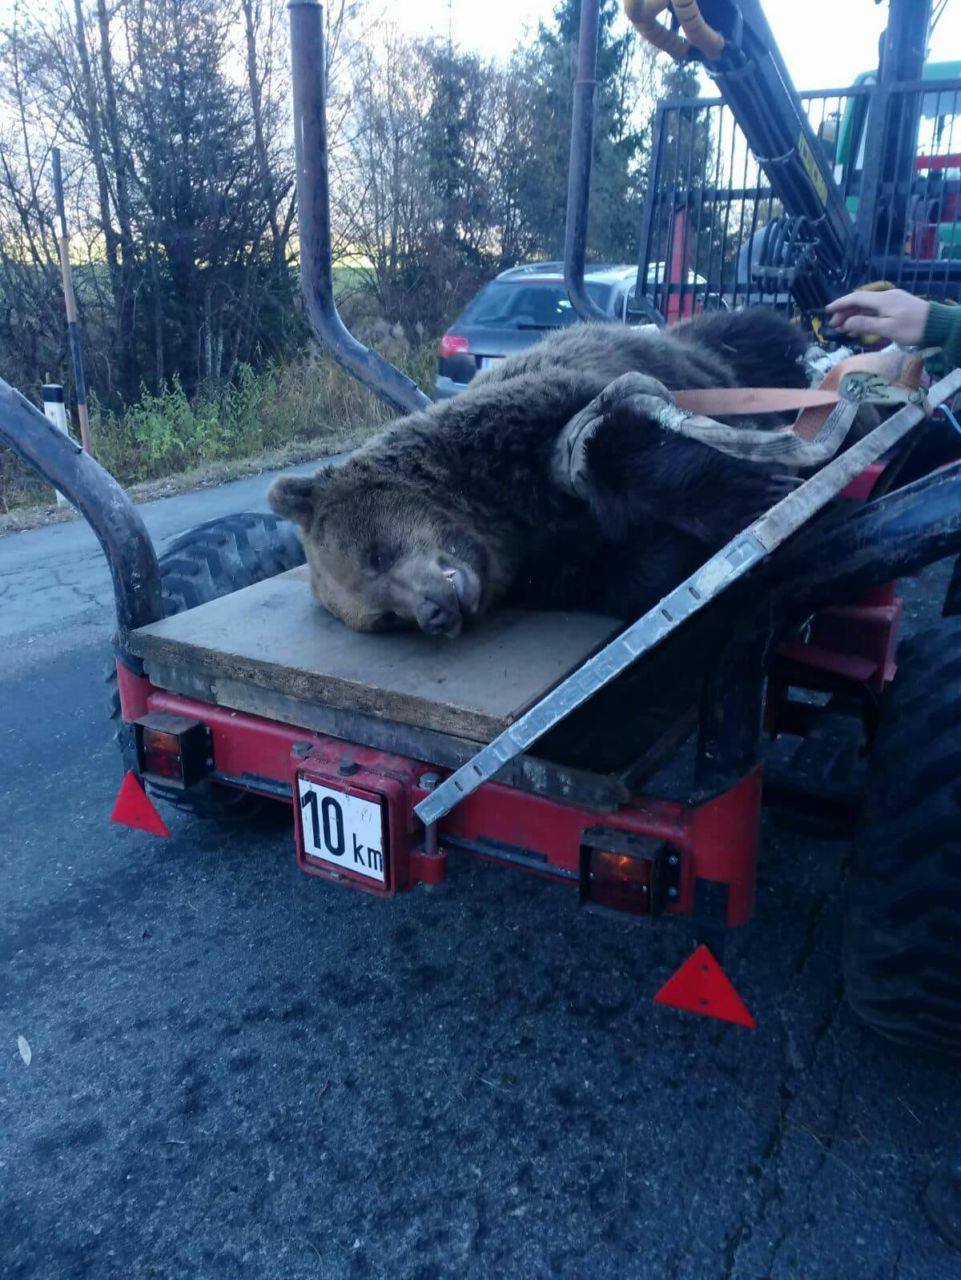 Abtransport des Bären